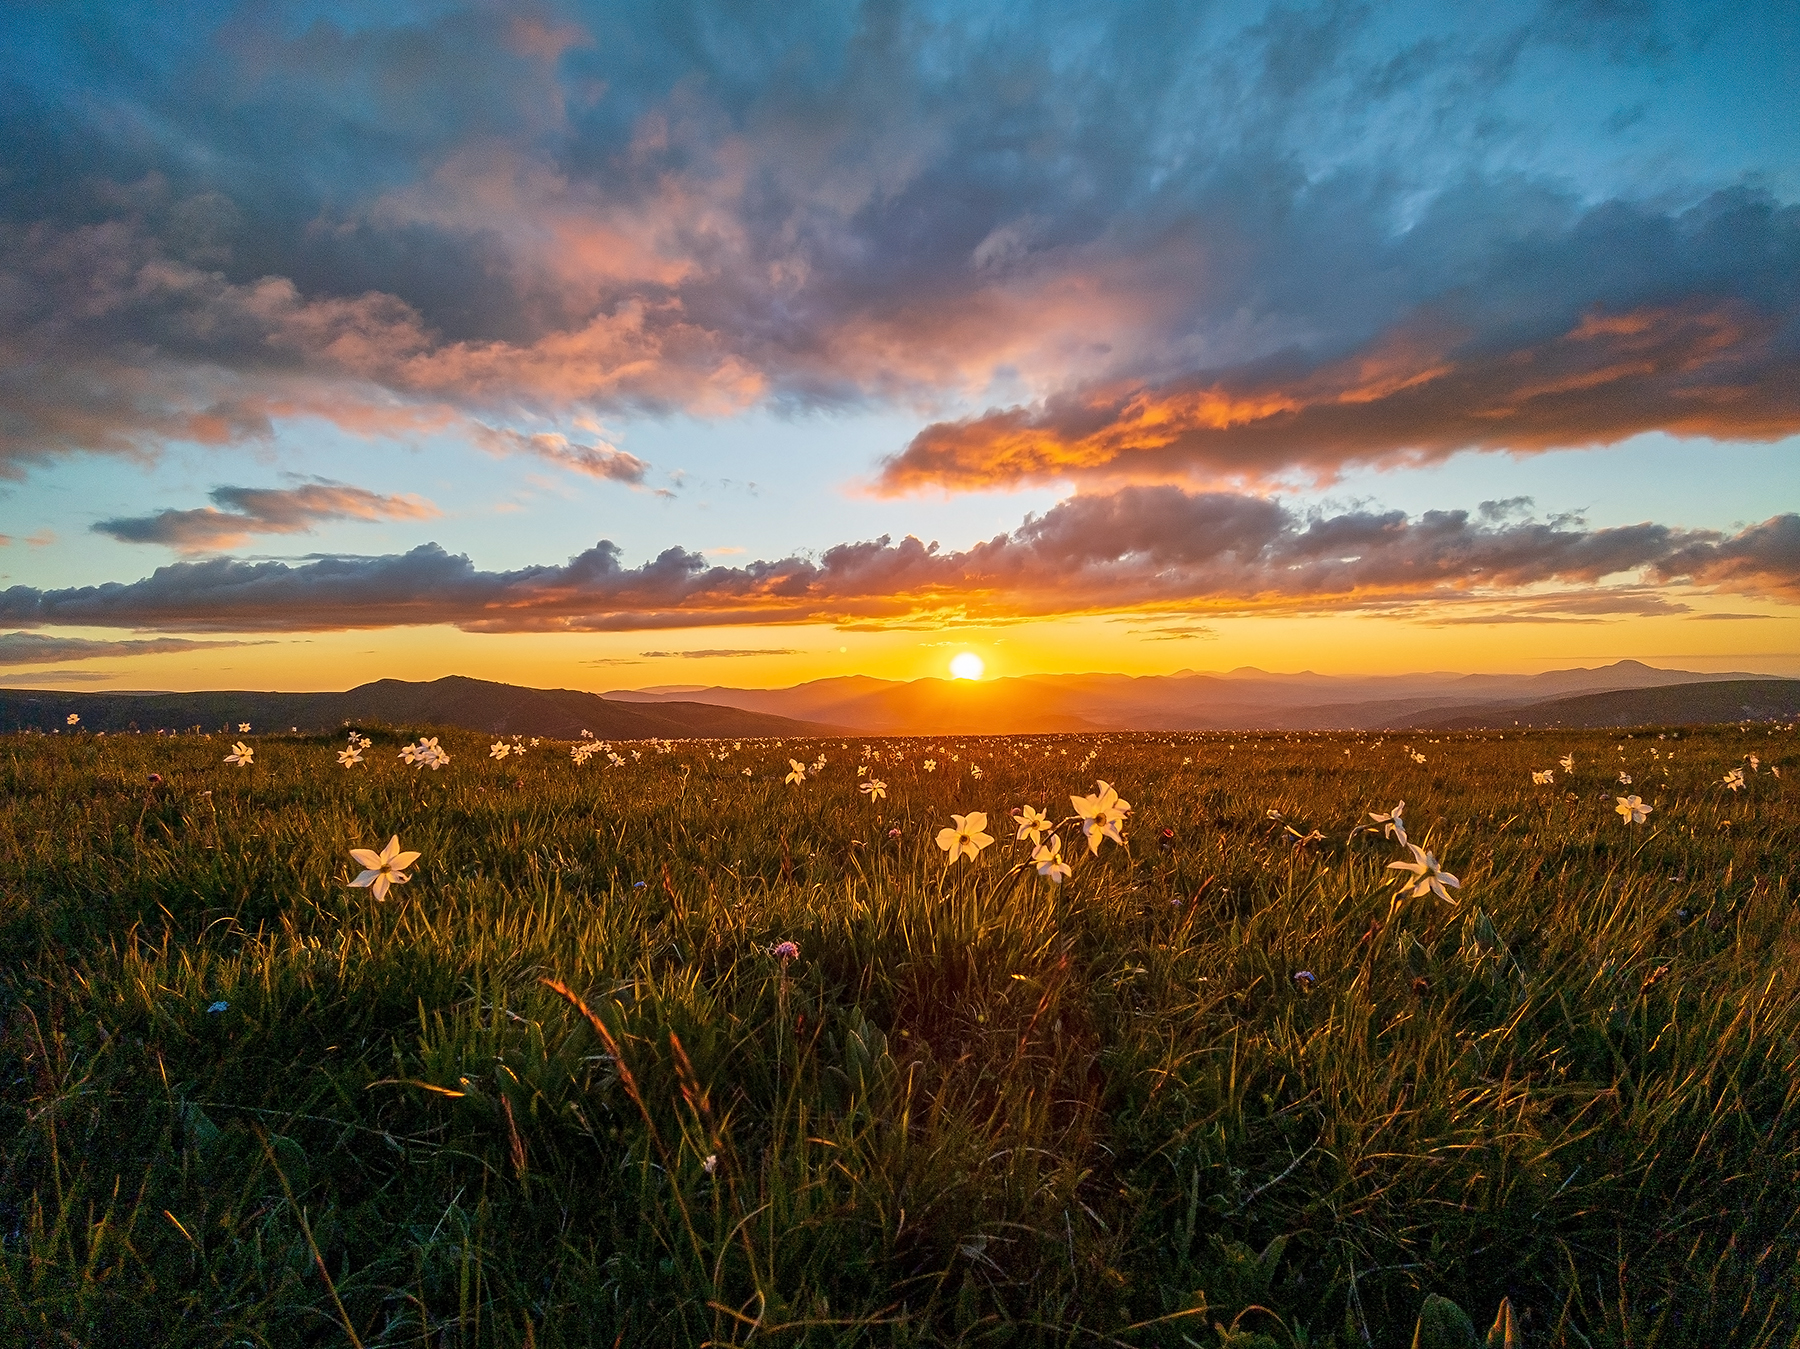 Daffodils at sunset...